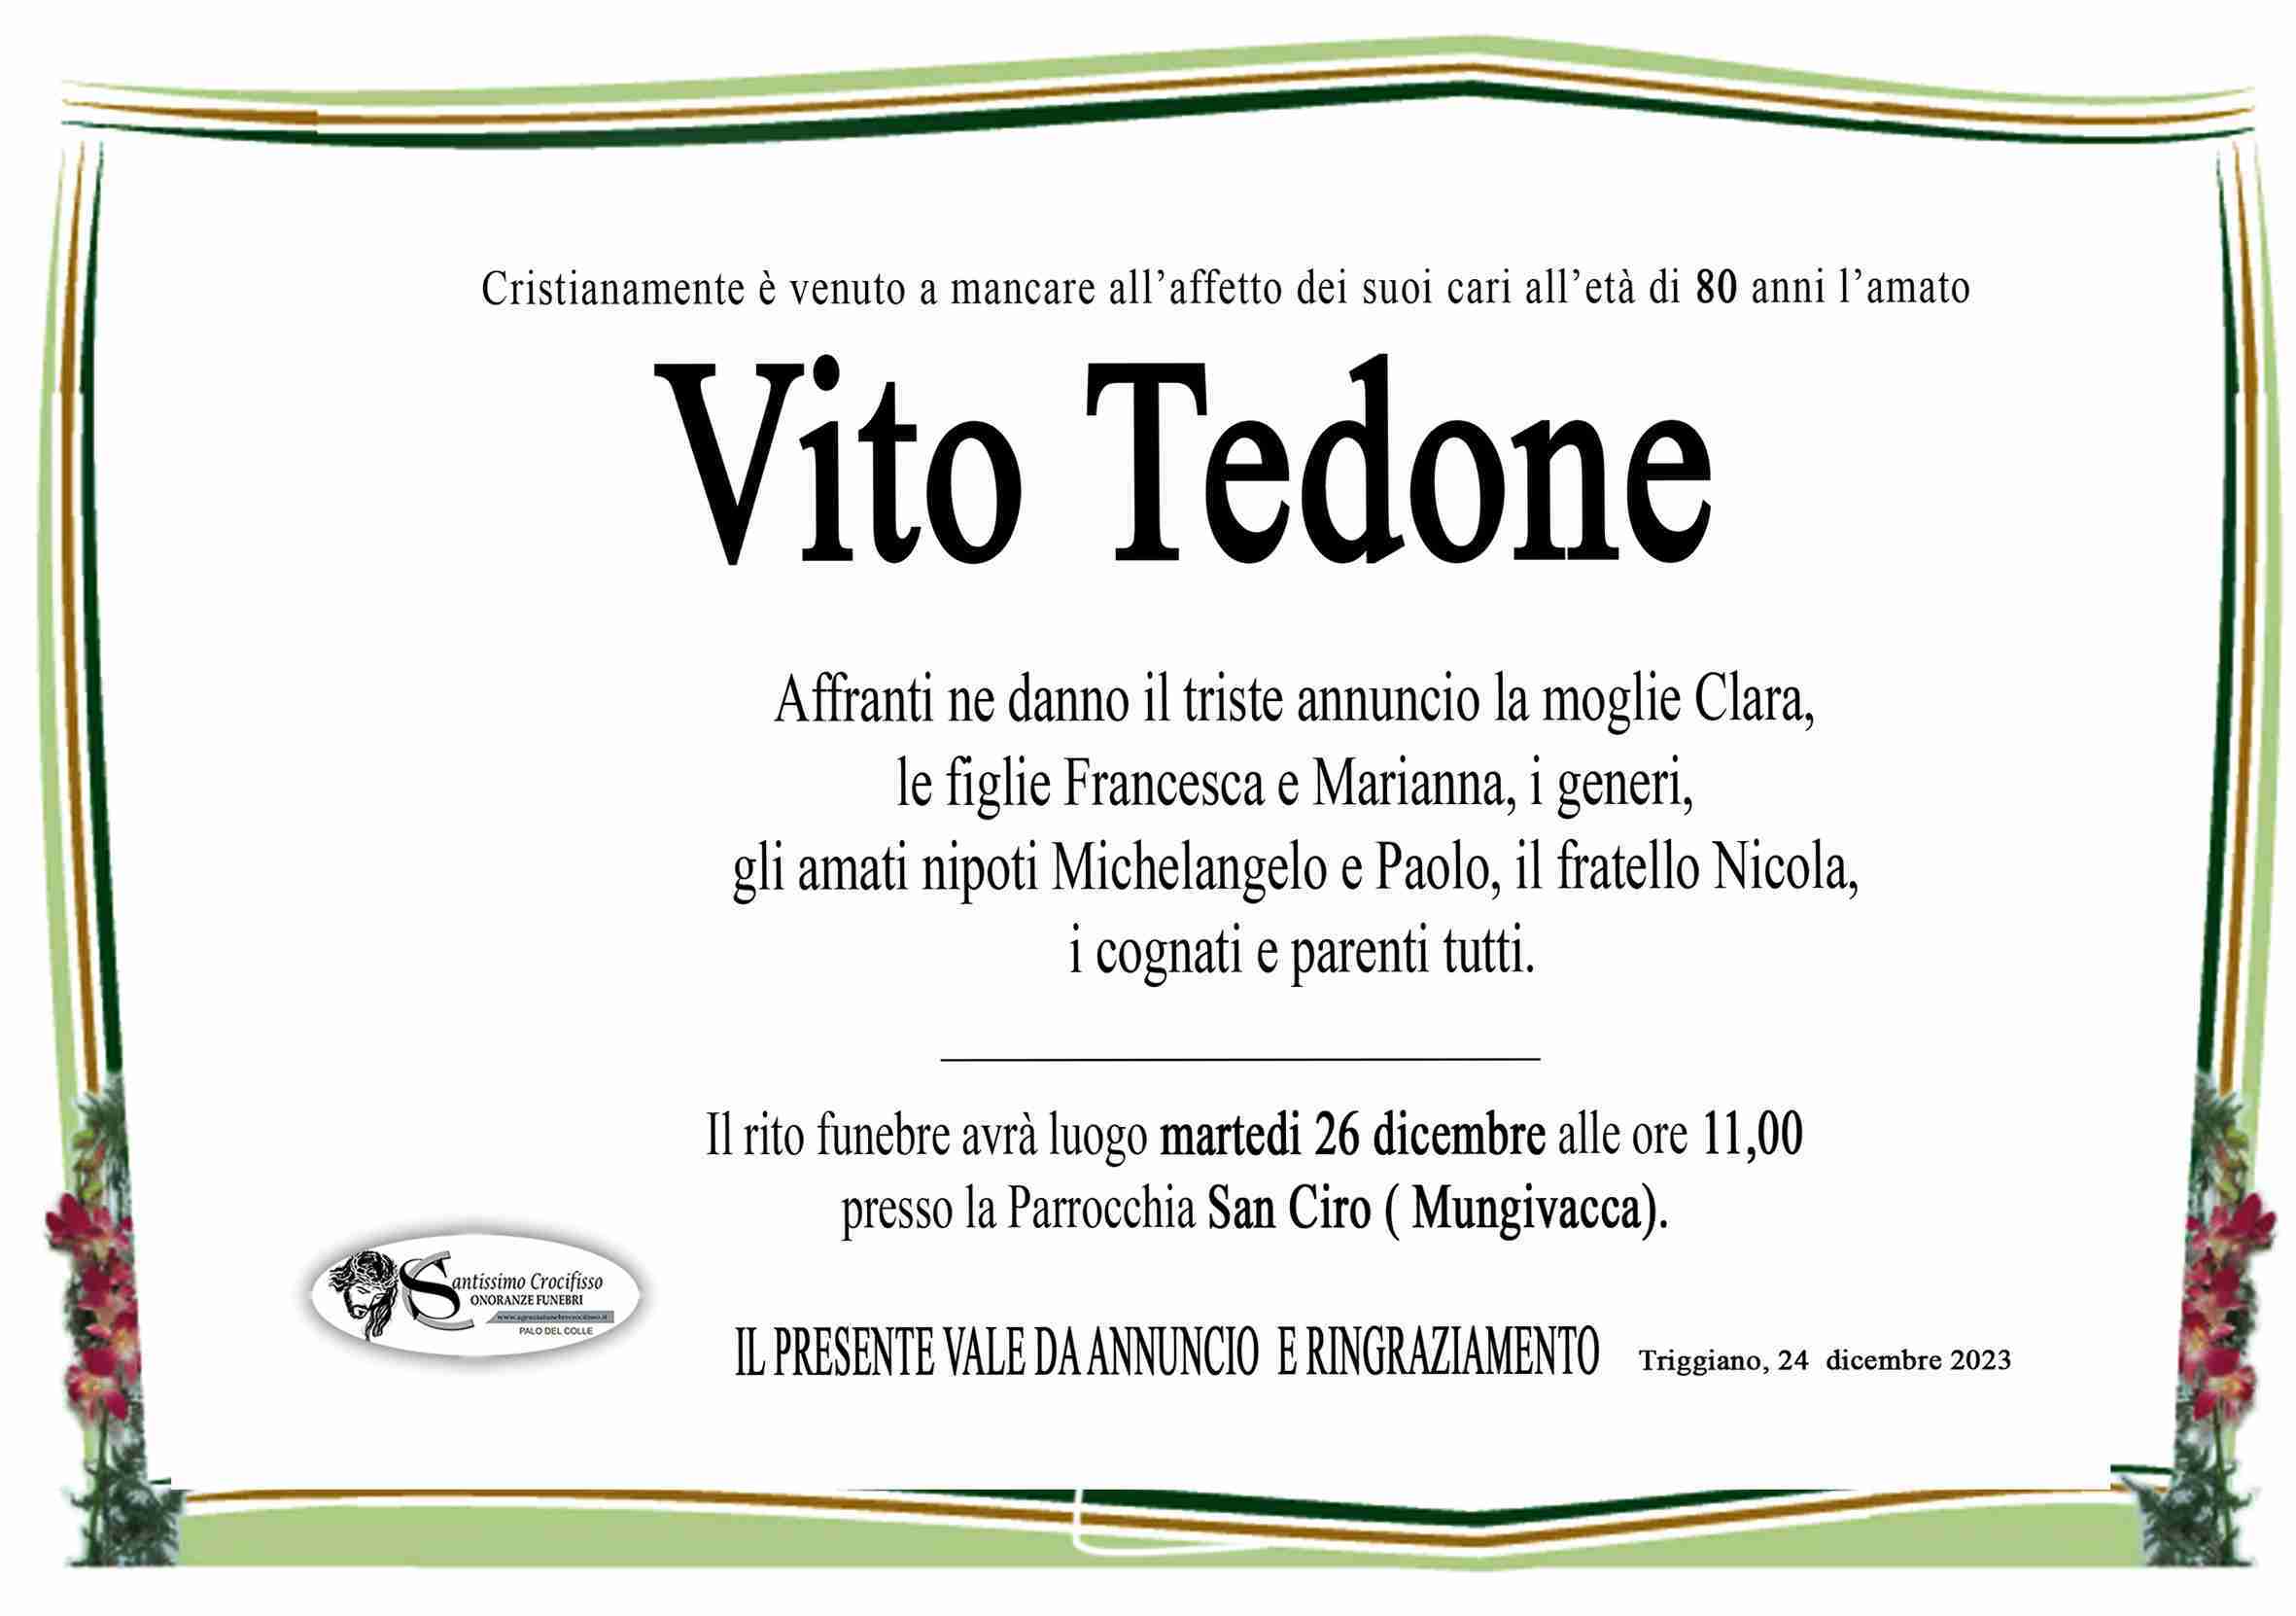 Vito Tedone